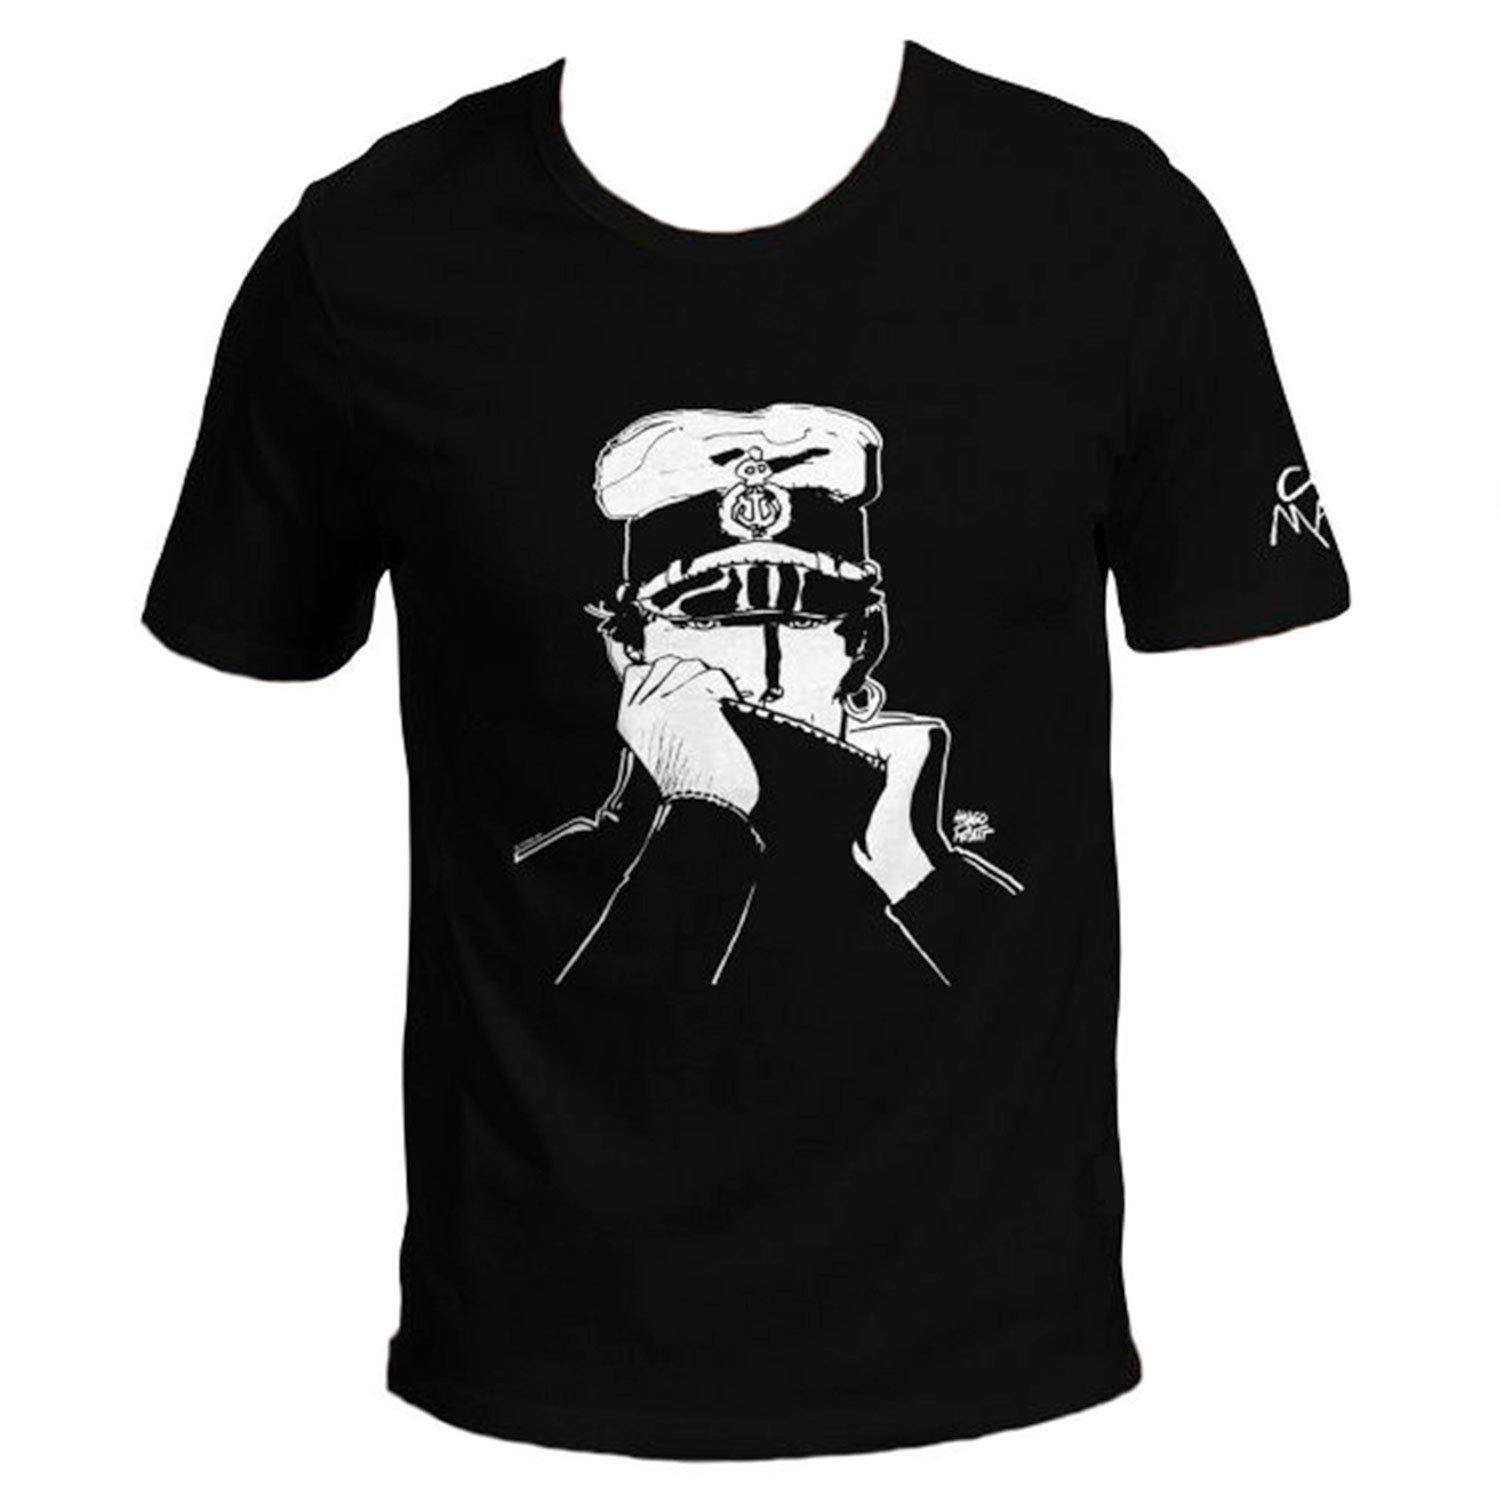 Hugo Pratt T-shirt : Corto Maltese , The sailor - Black - Size M